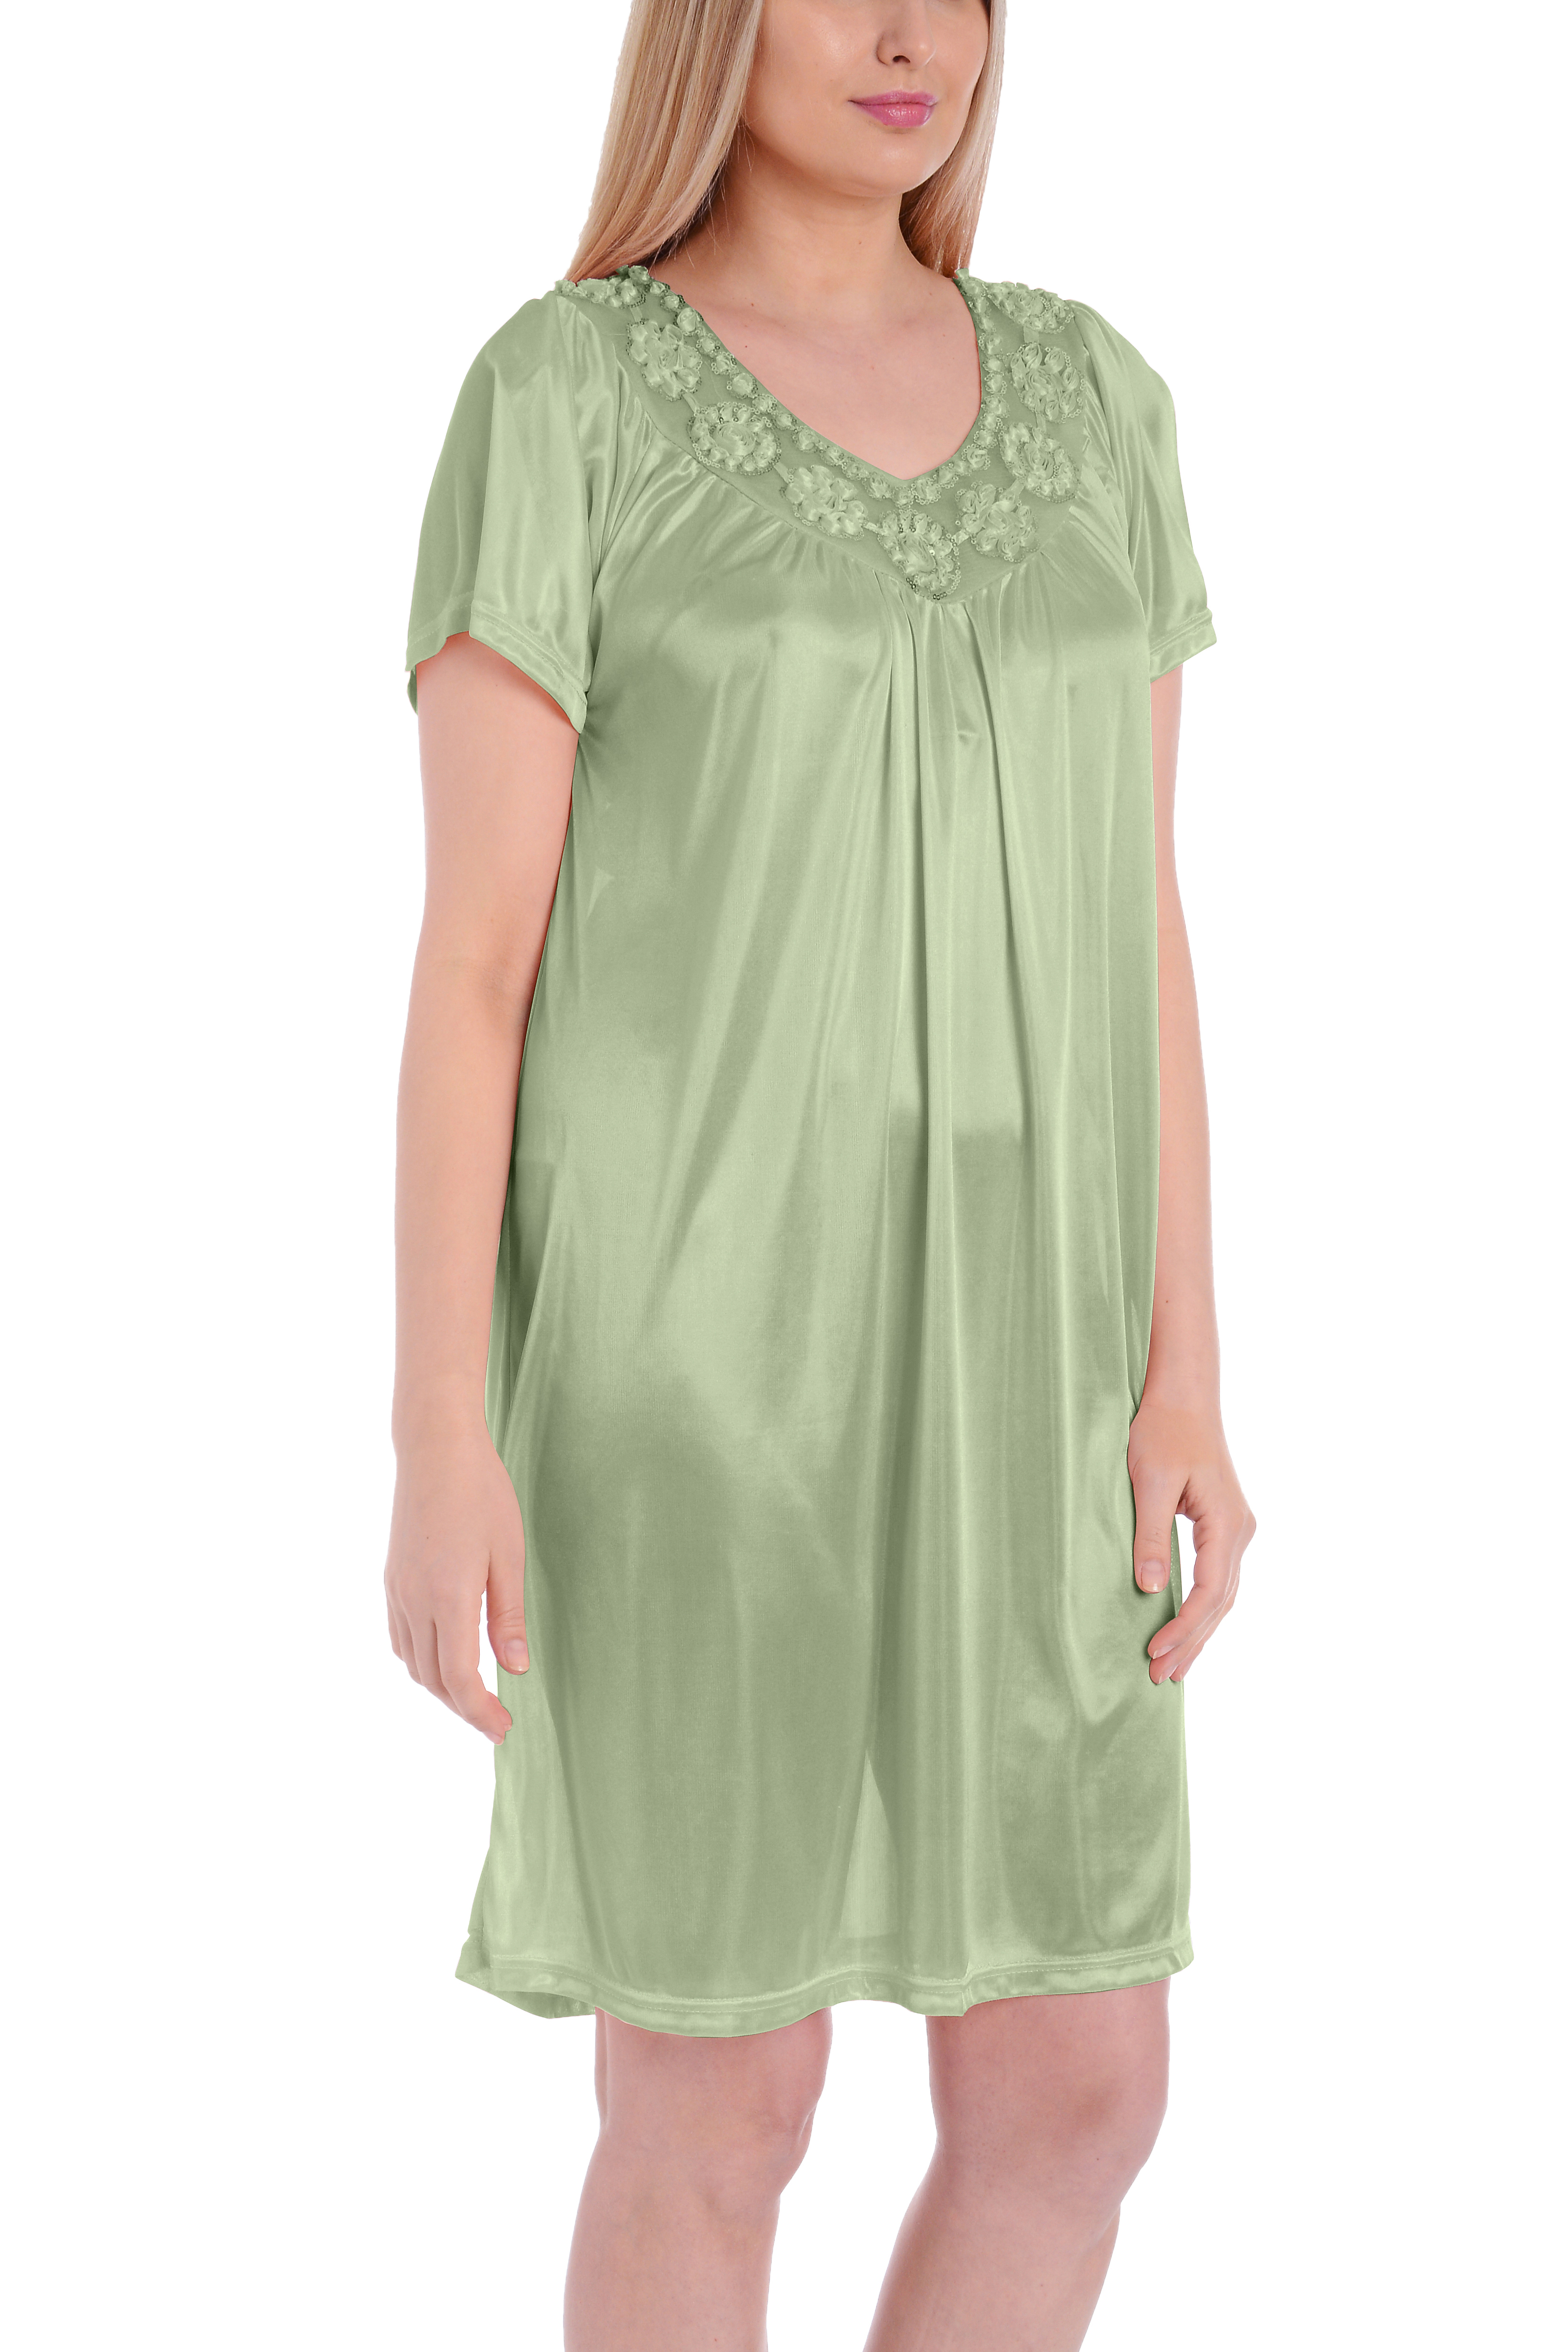 Details about   Women's Satin Silk Short Sleeve Fine Sequin Nightgown by EZI